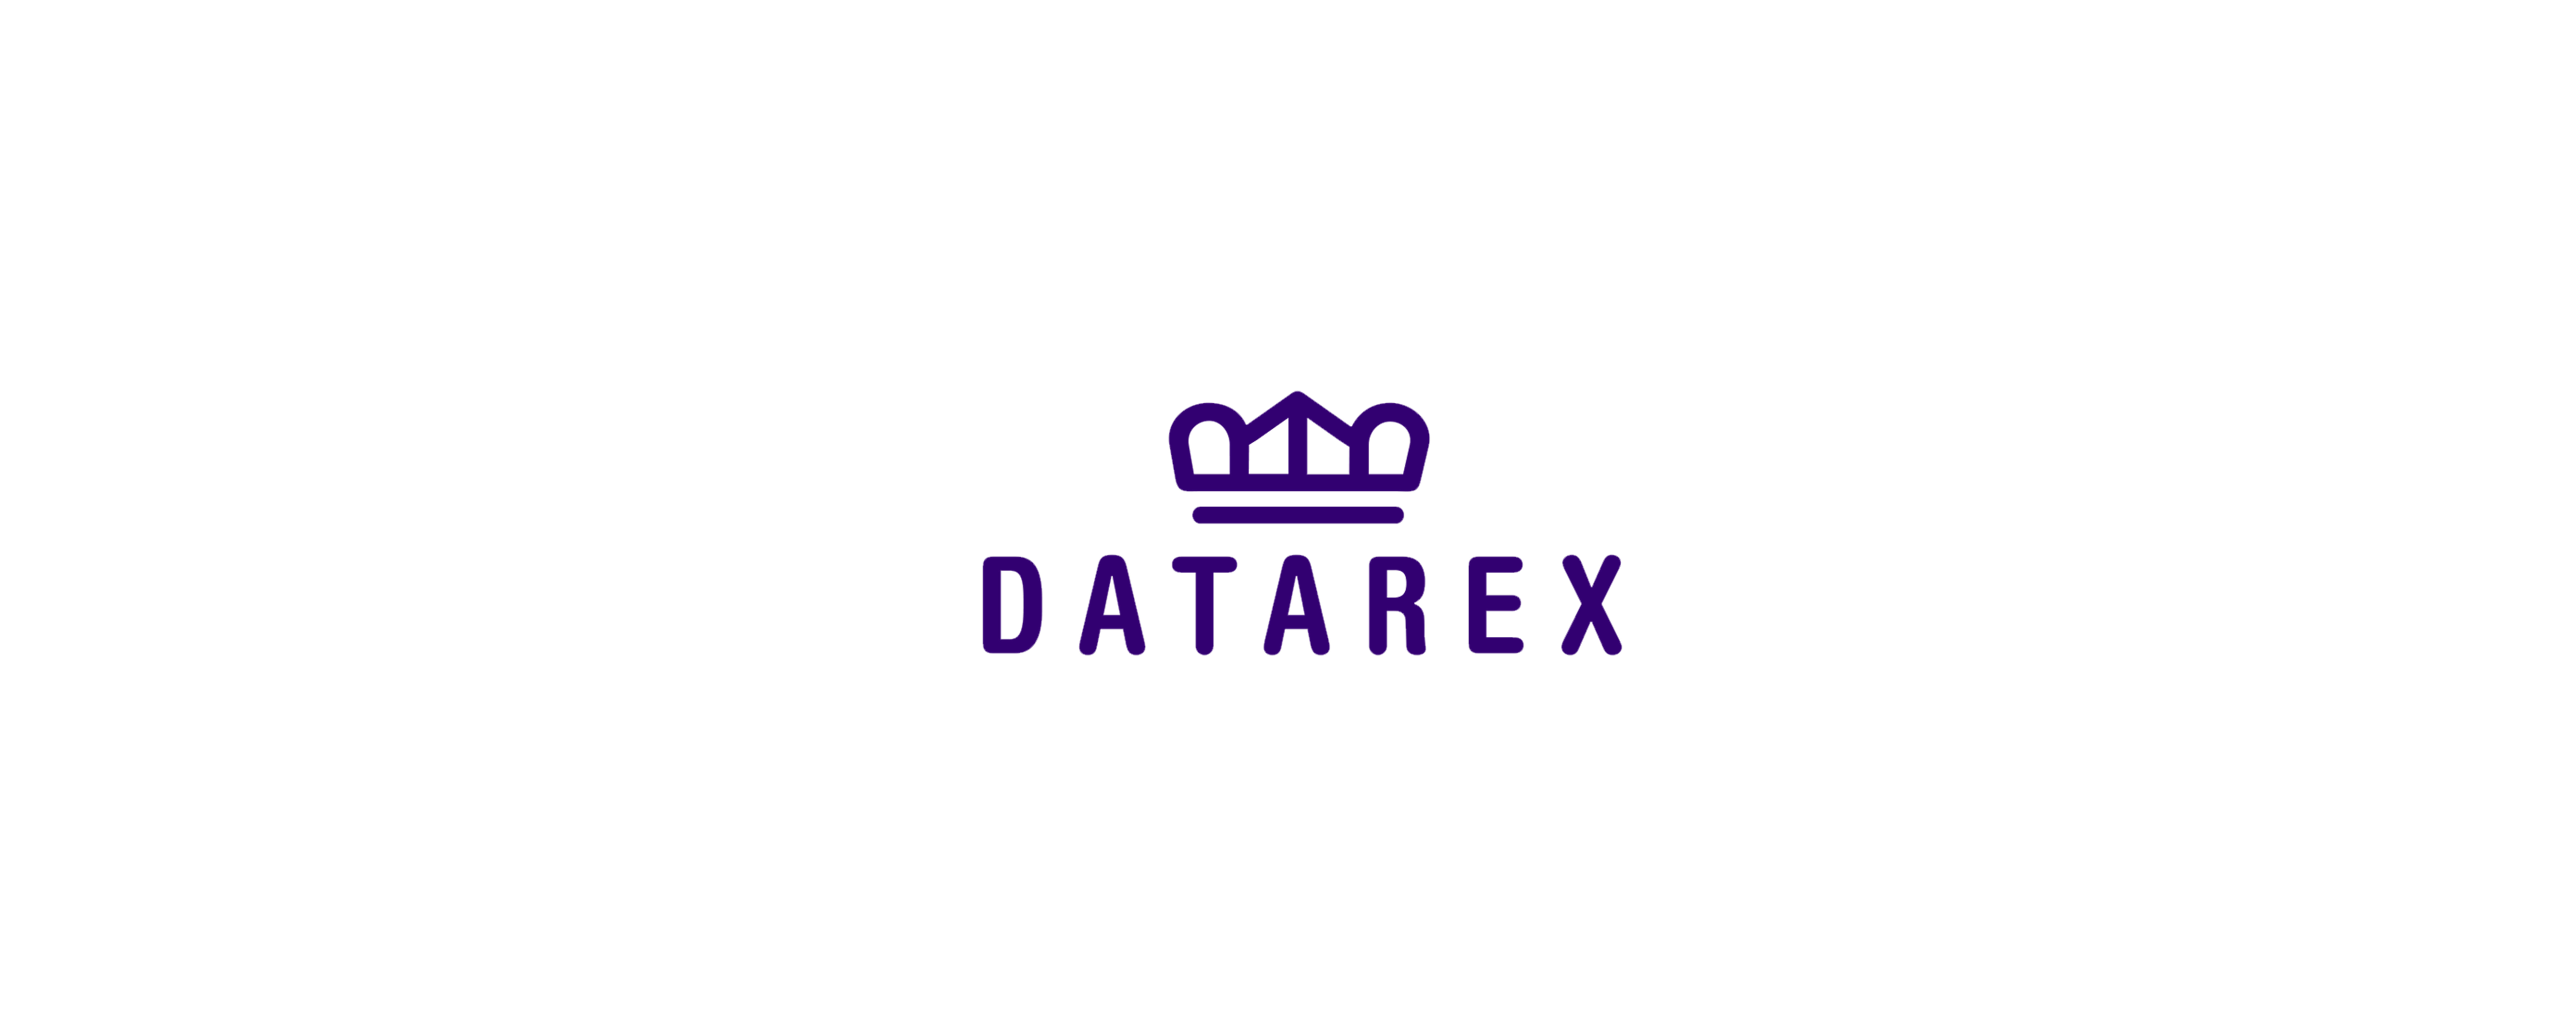 Datarex